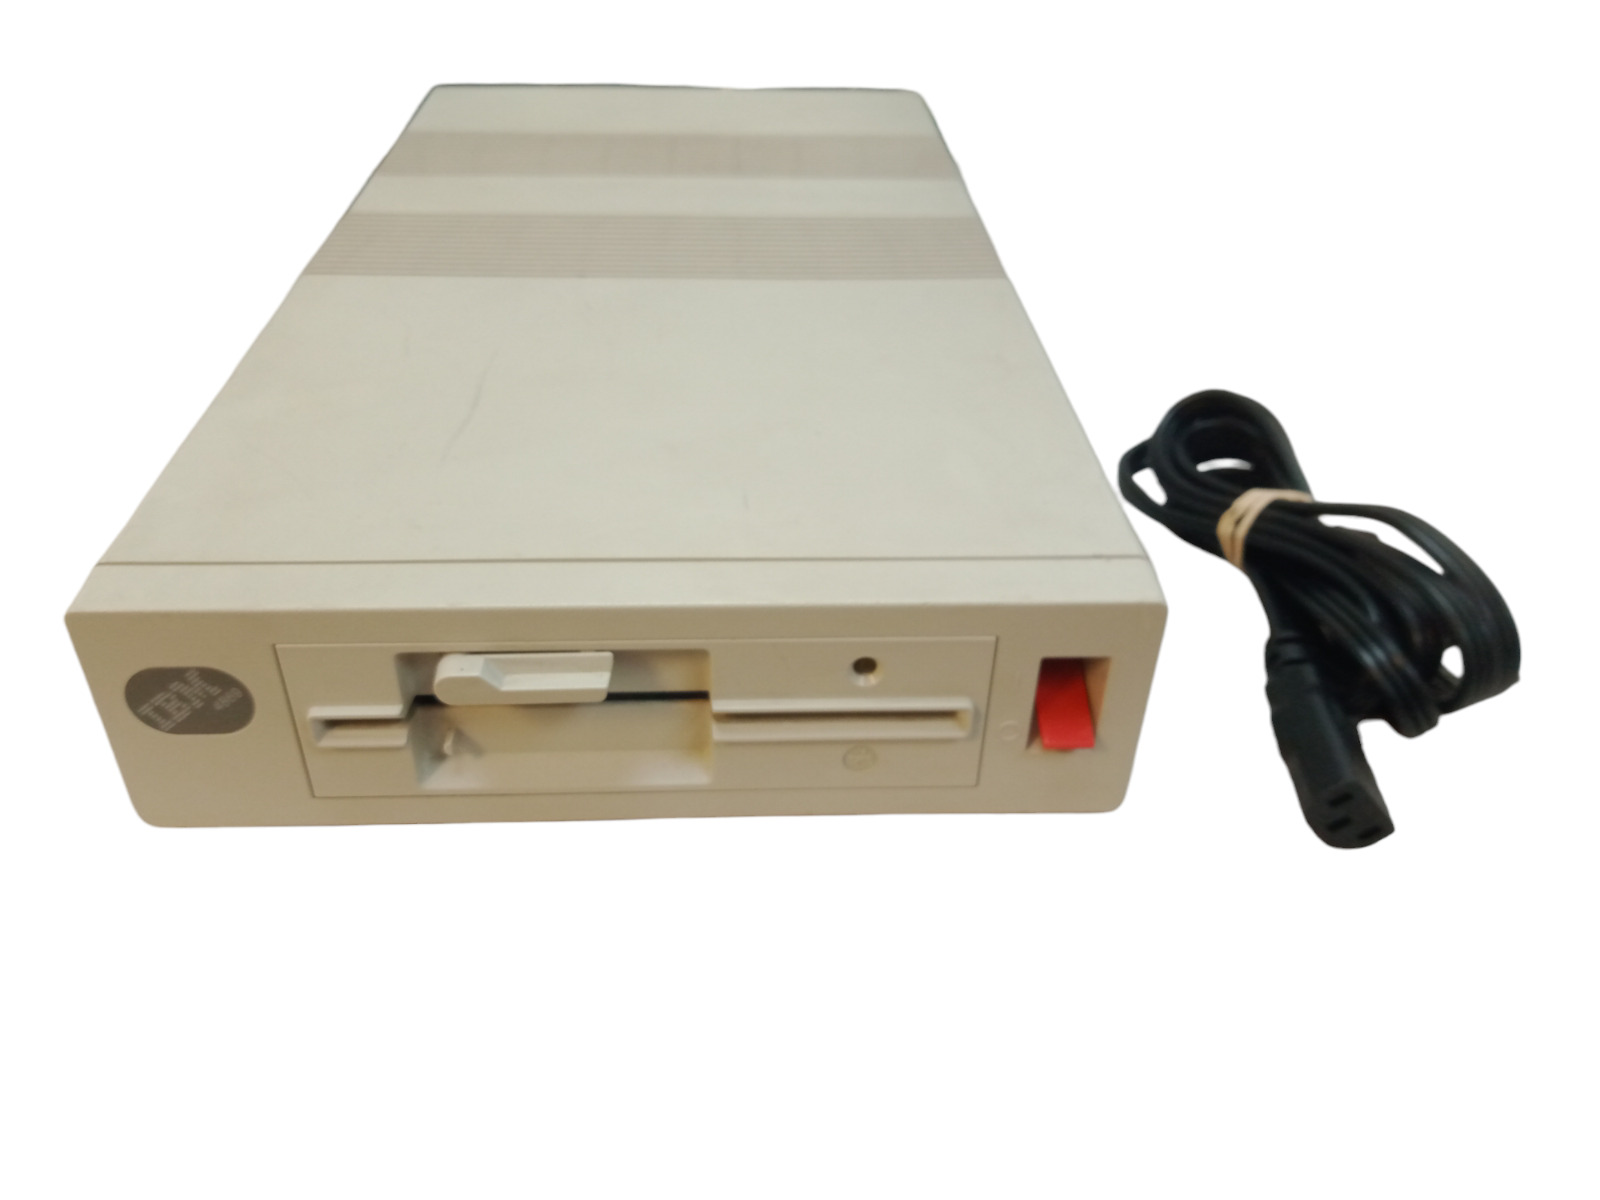 Vintage IBM 4869 External 5 1/4in/5.25in Floppy Diskette Drive tested working